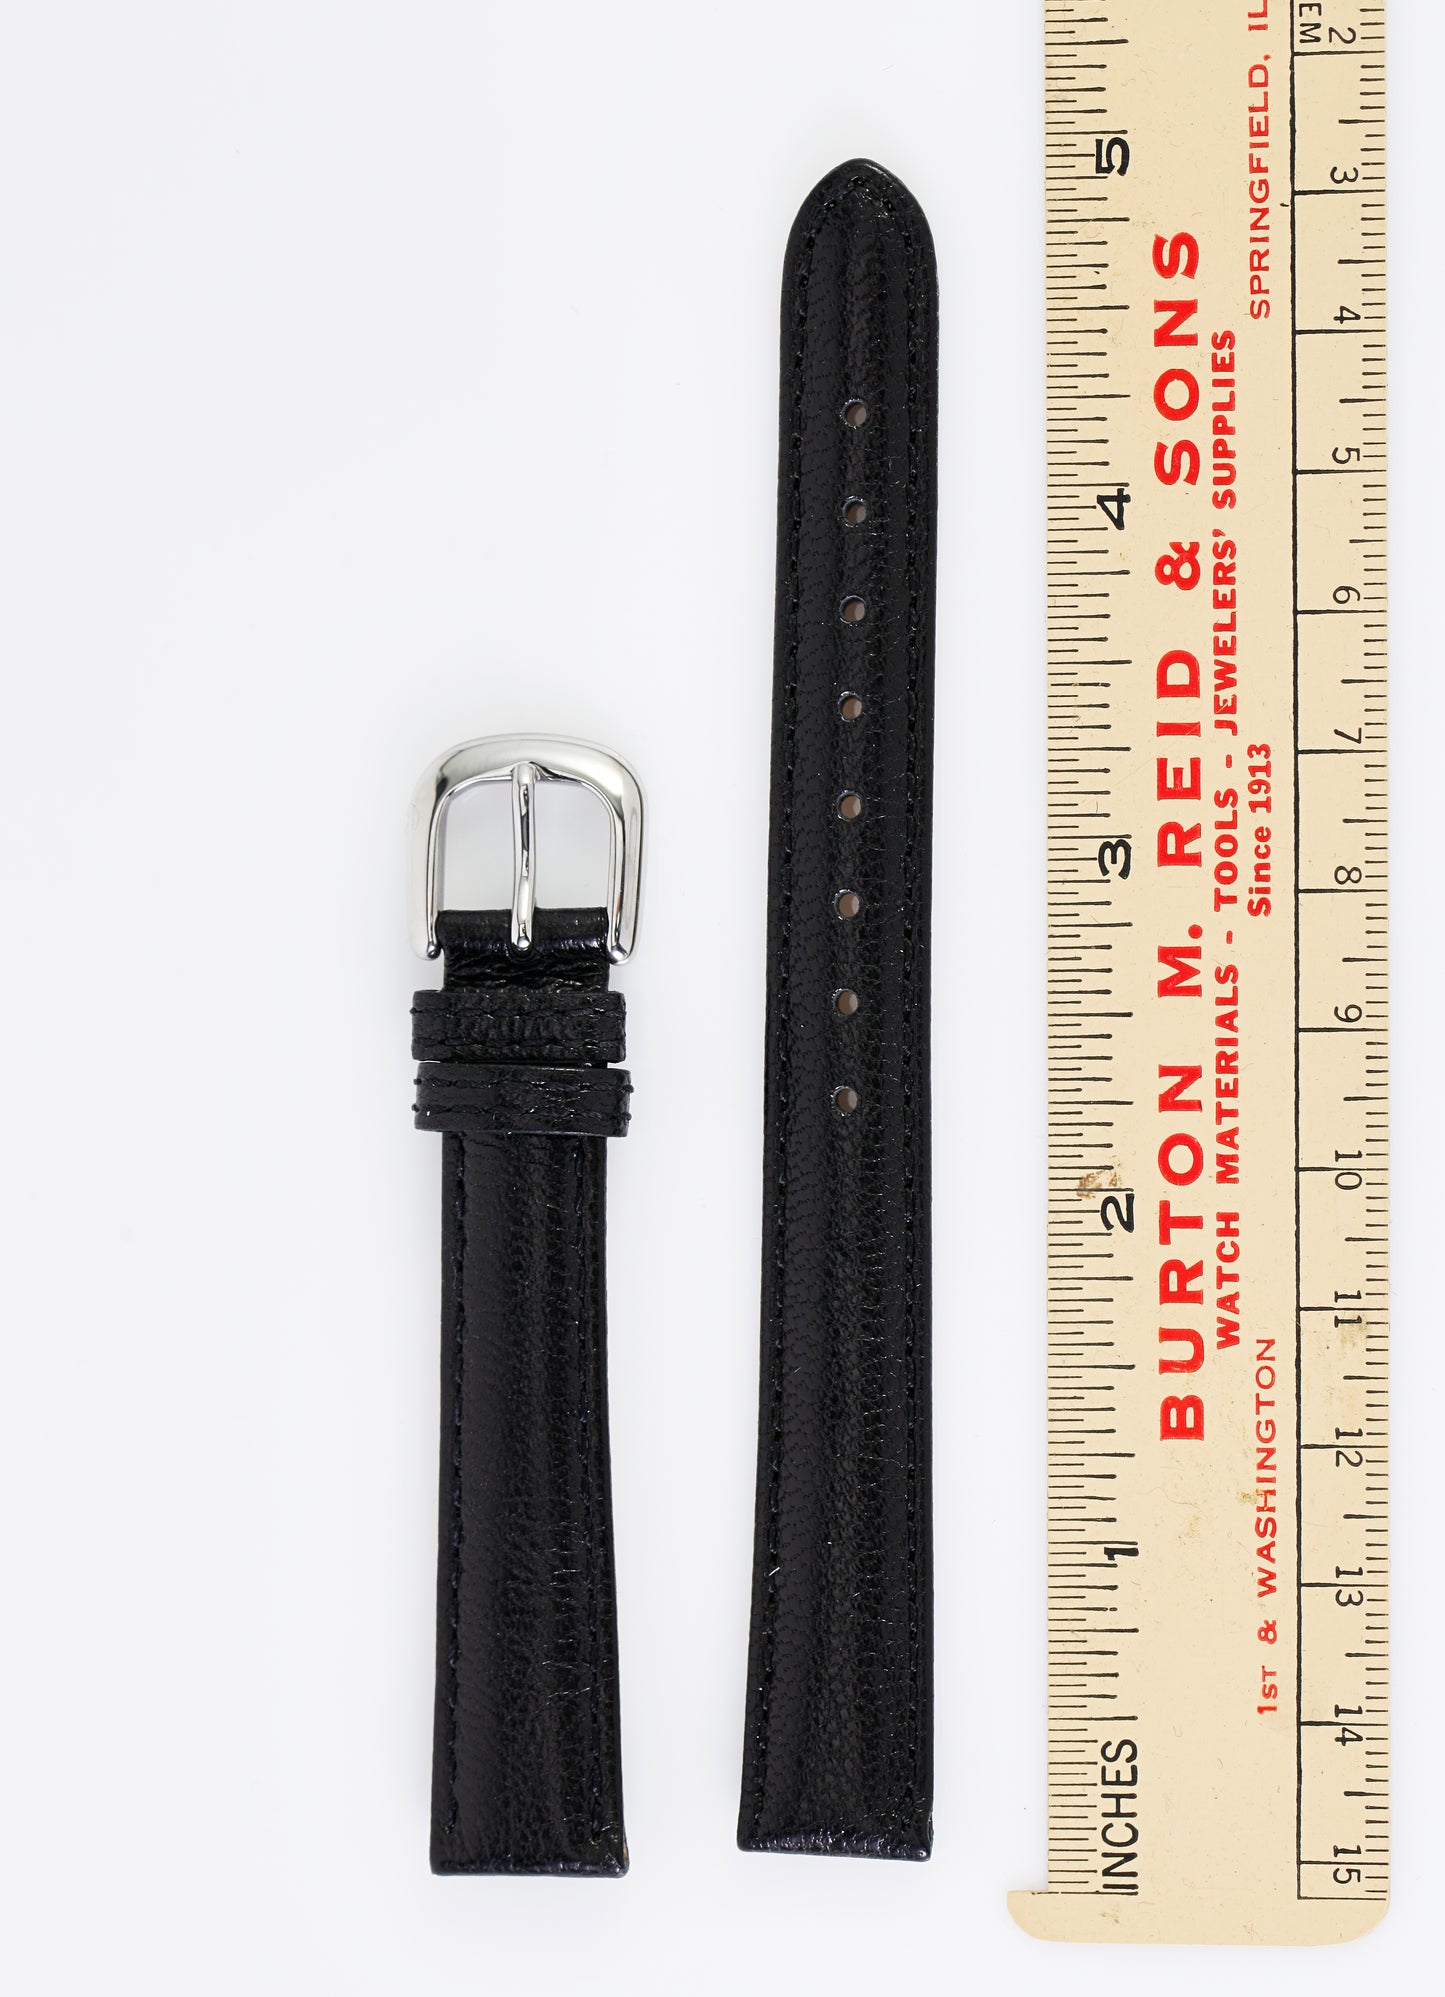 Ecclissi 14mm x 12mm Black Leather Strap Original Buckle 23785